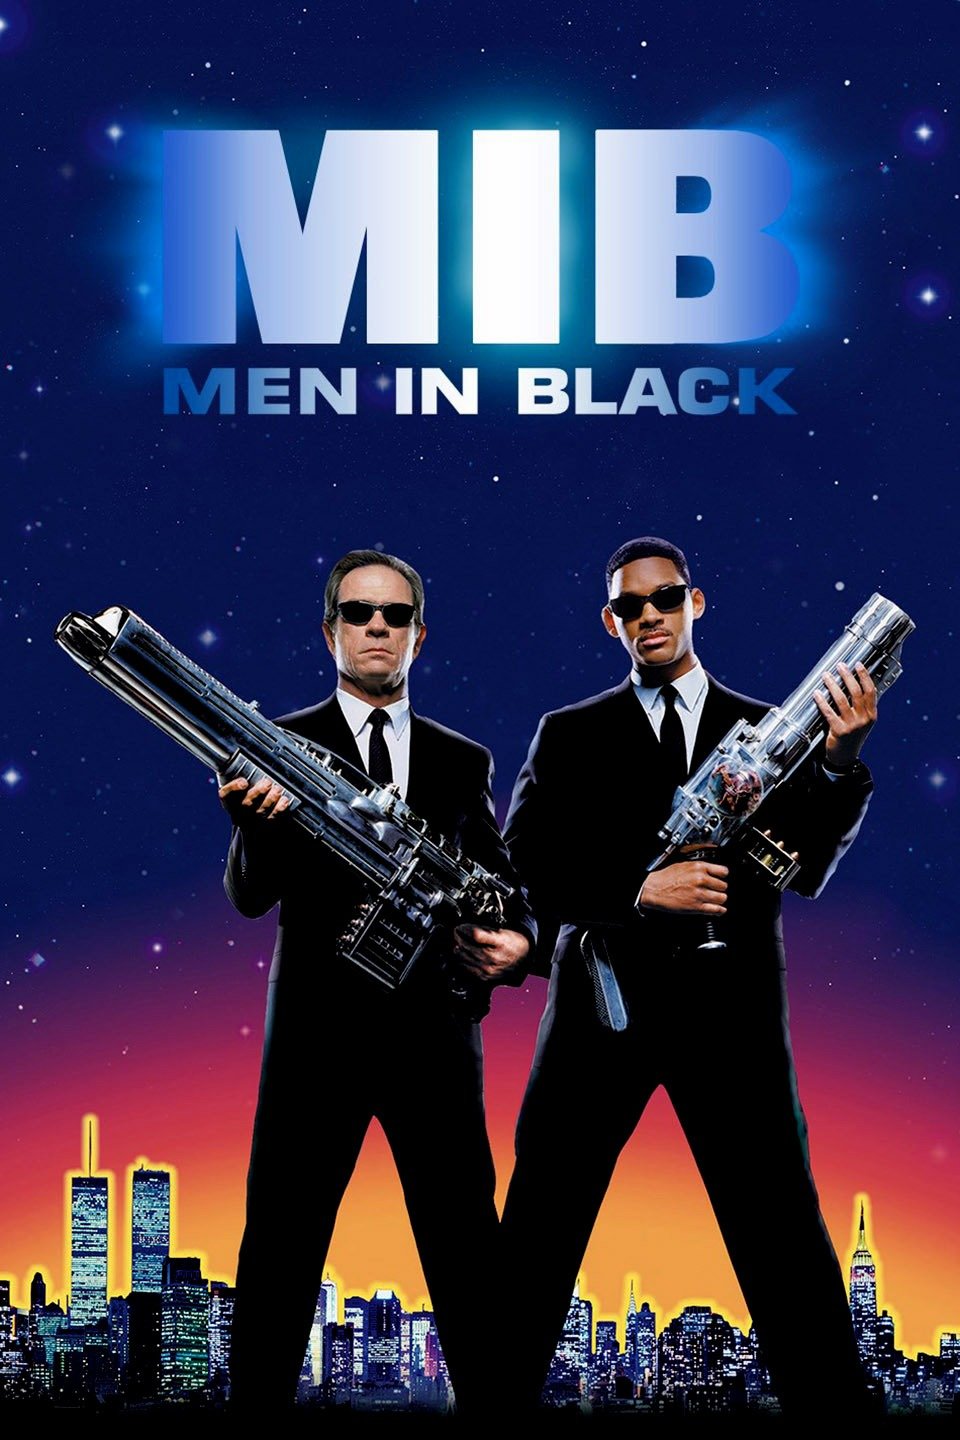 [MINI Super-HQ] Men In Black (1997) เอ็มไอบี หน่วยจารชนพิทักษ์จักรวาล ภาค 1 [1080p] [พากษ์ไทย 5.1 + เสียงอังกฤษ DTS] [บรรยายไทย + อังกฤษ] [เสียงไทย + ซับไทย] [OPENLOAD]